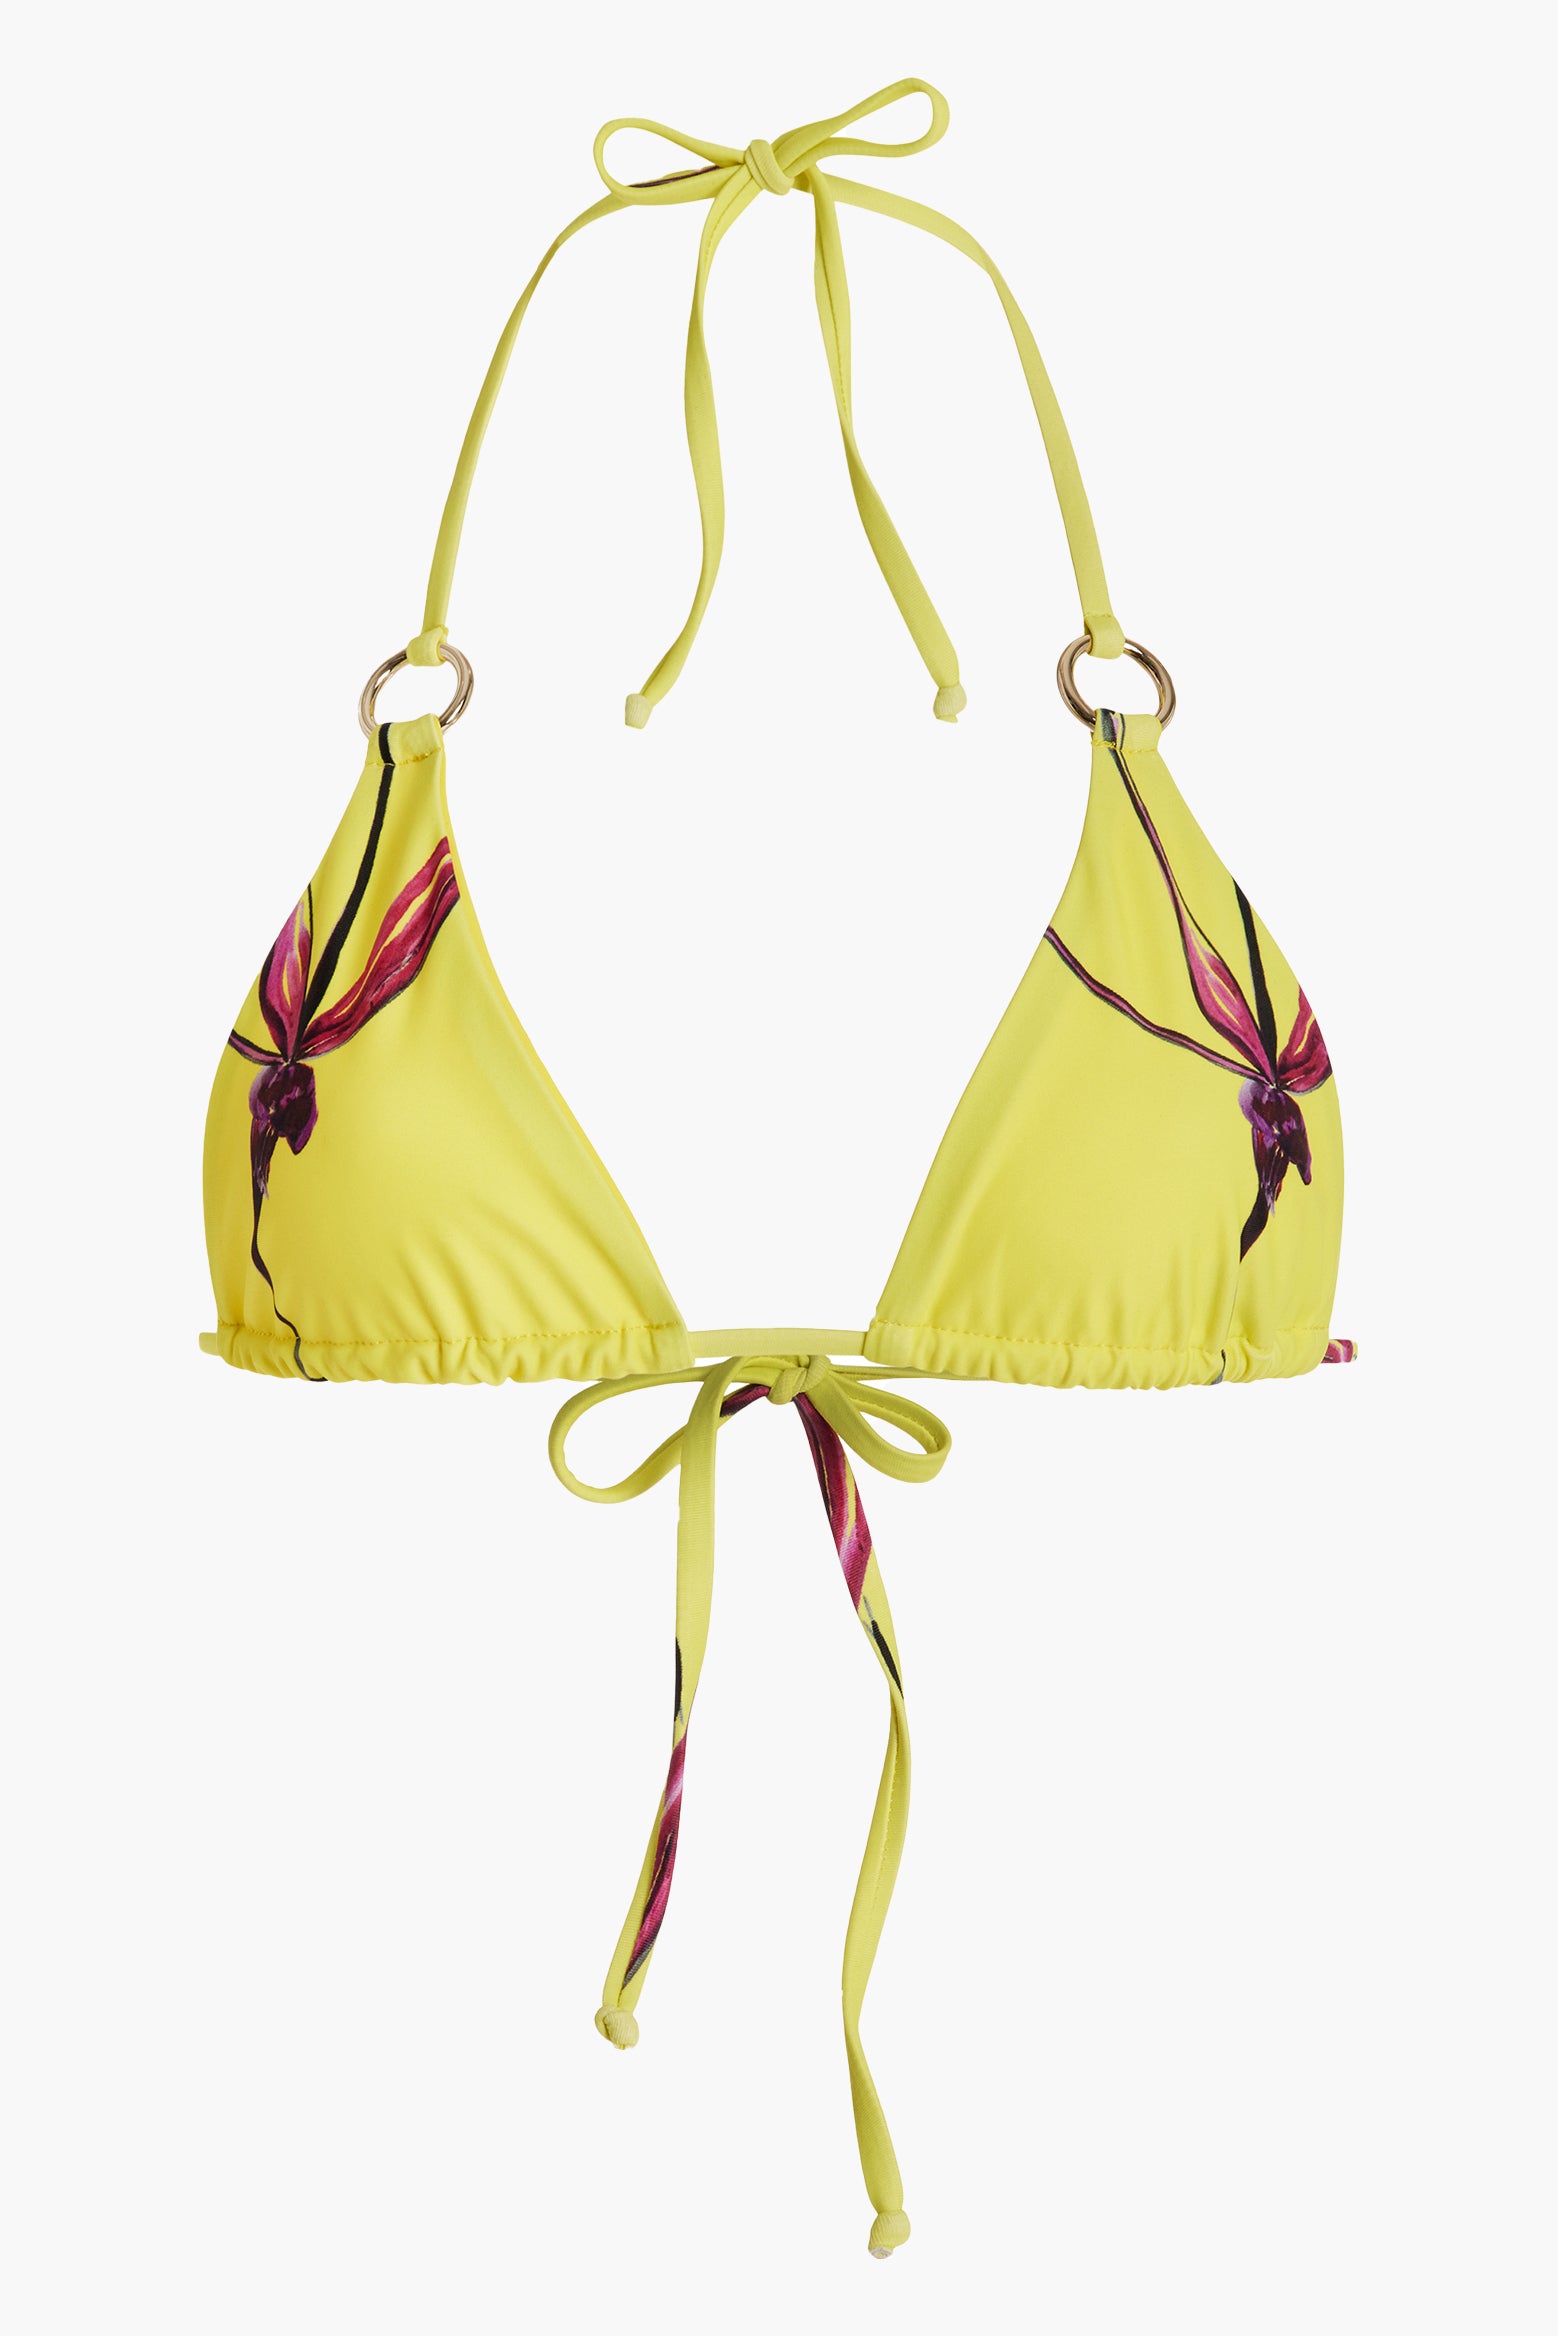 The Louisa Ballou Mini Ring Bikini Top in Caledenia Orchid available at The New Trend Australia